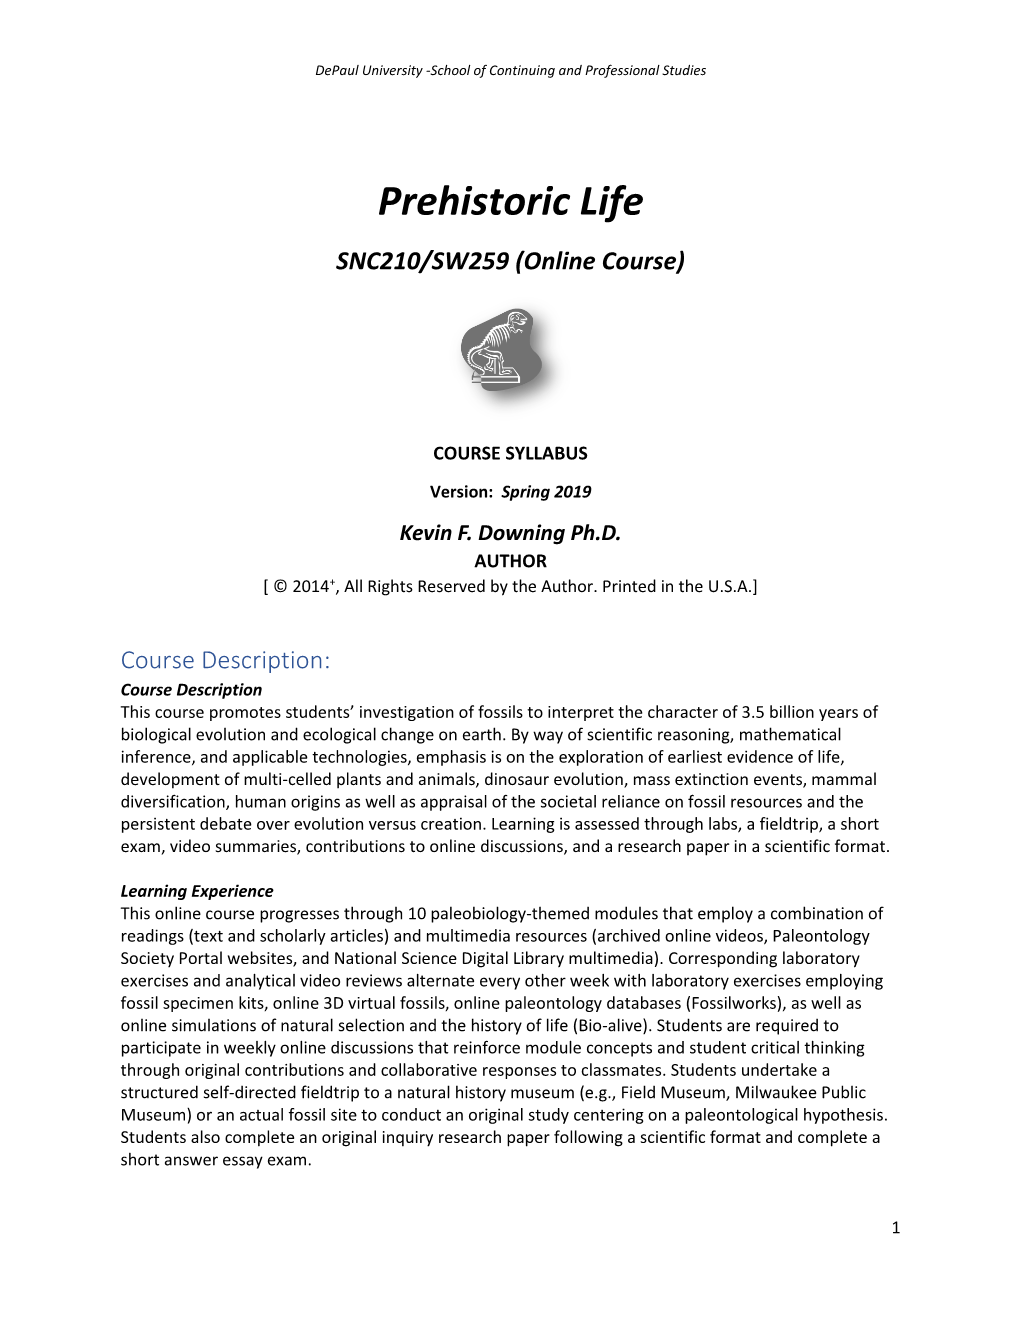 Prehistoric Life SNC210/SW259 (Online Course)